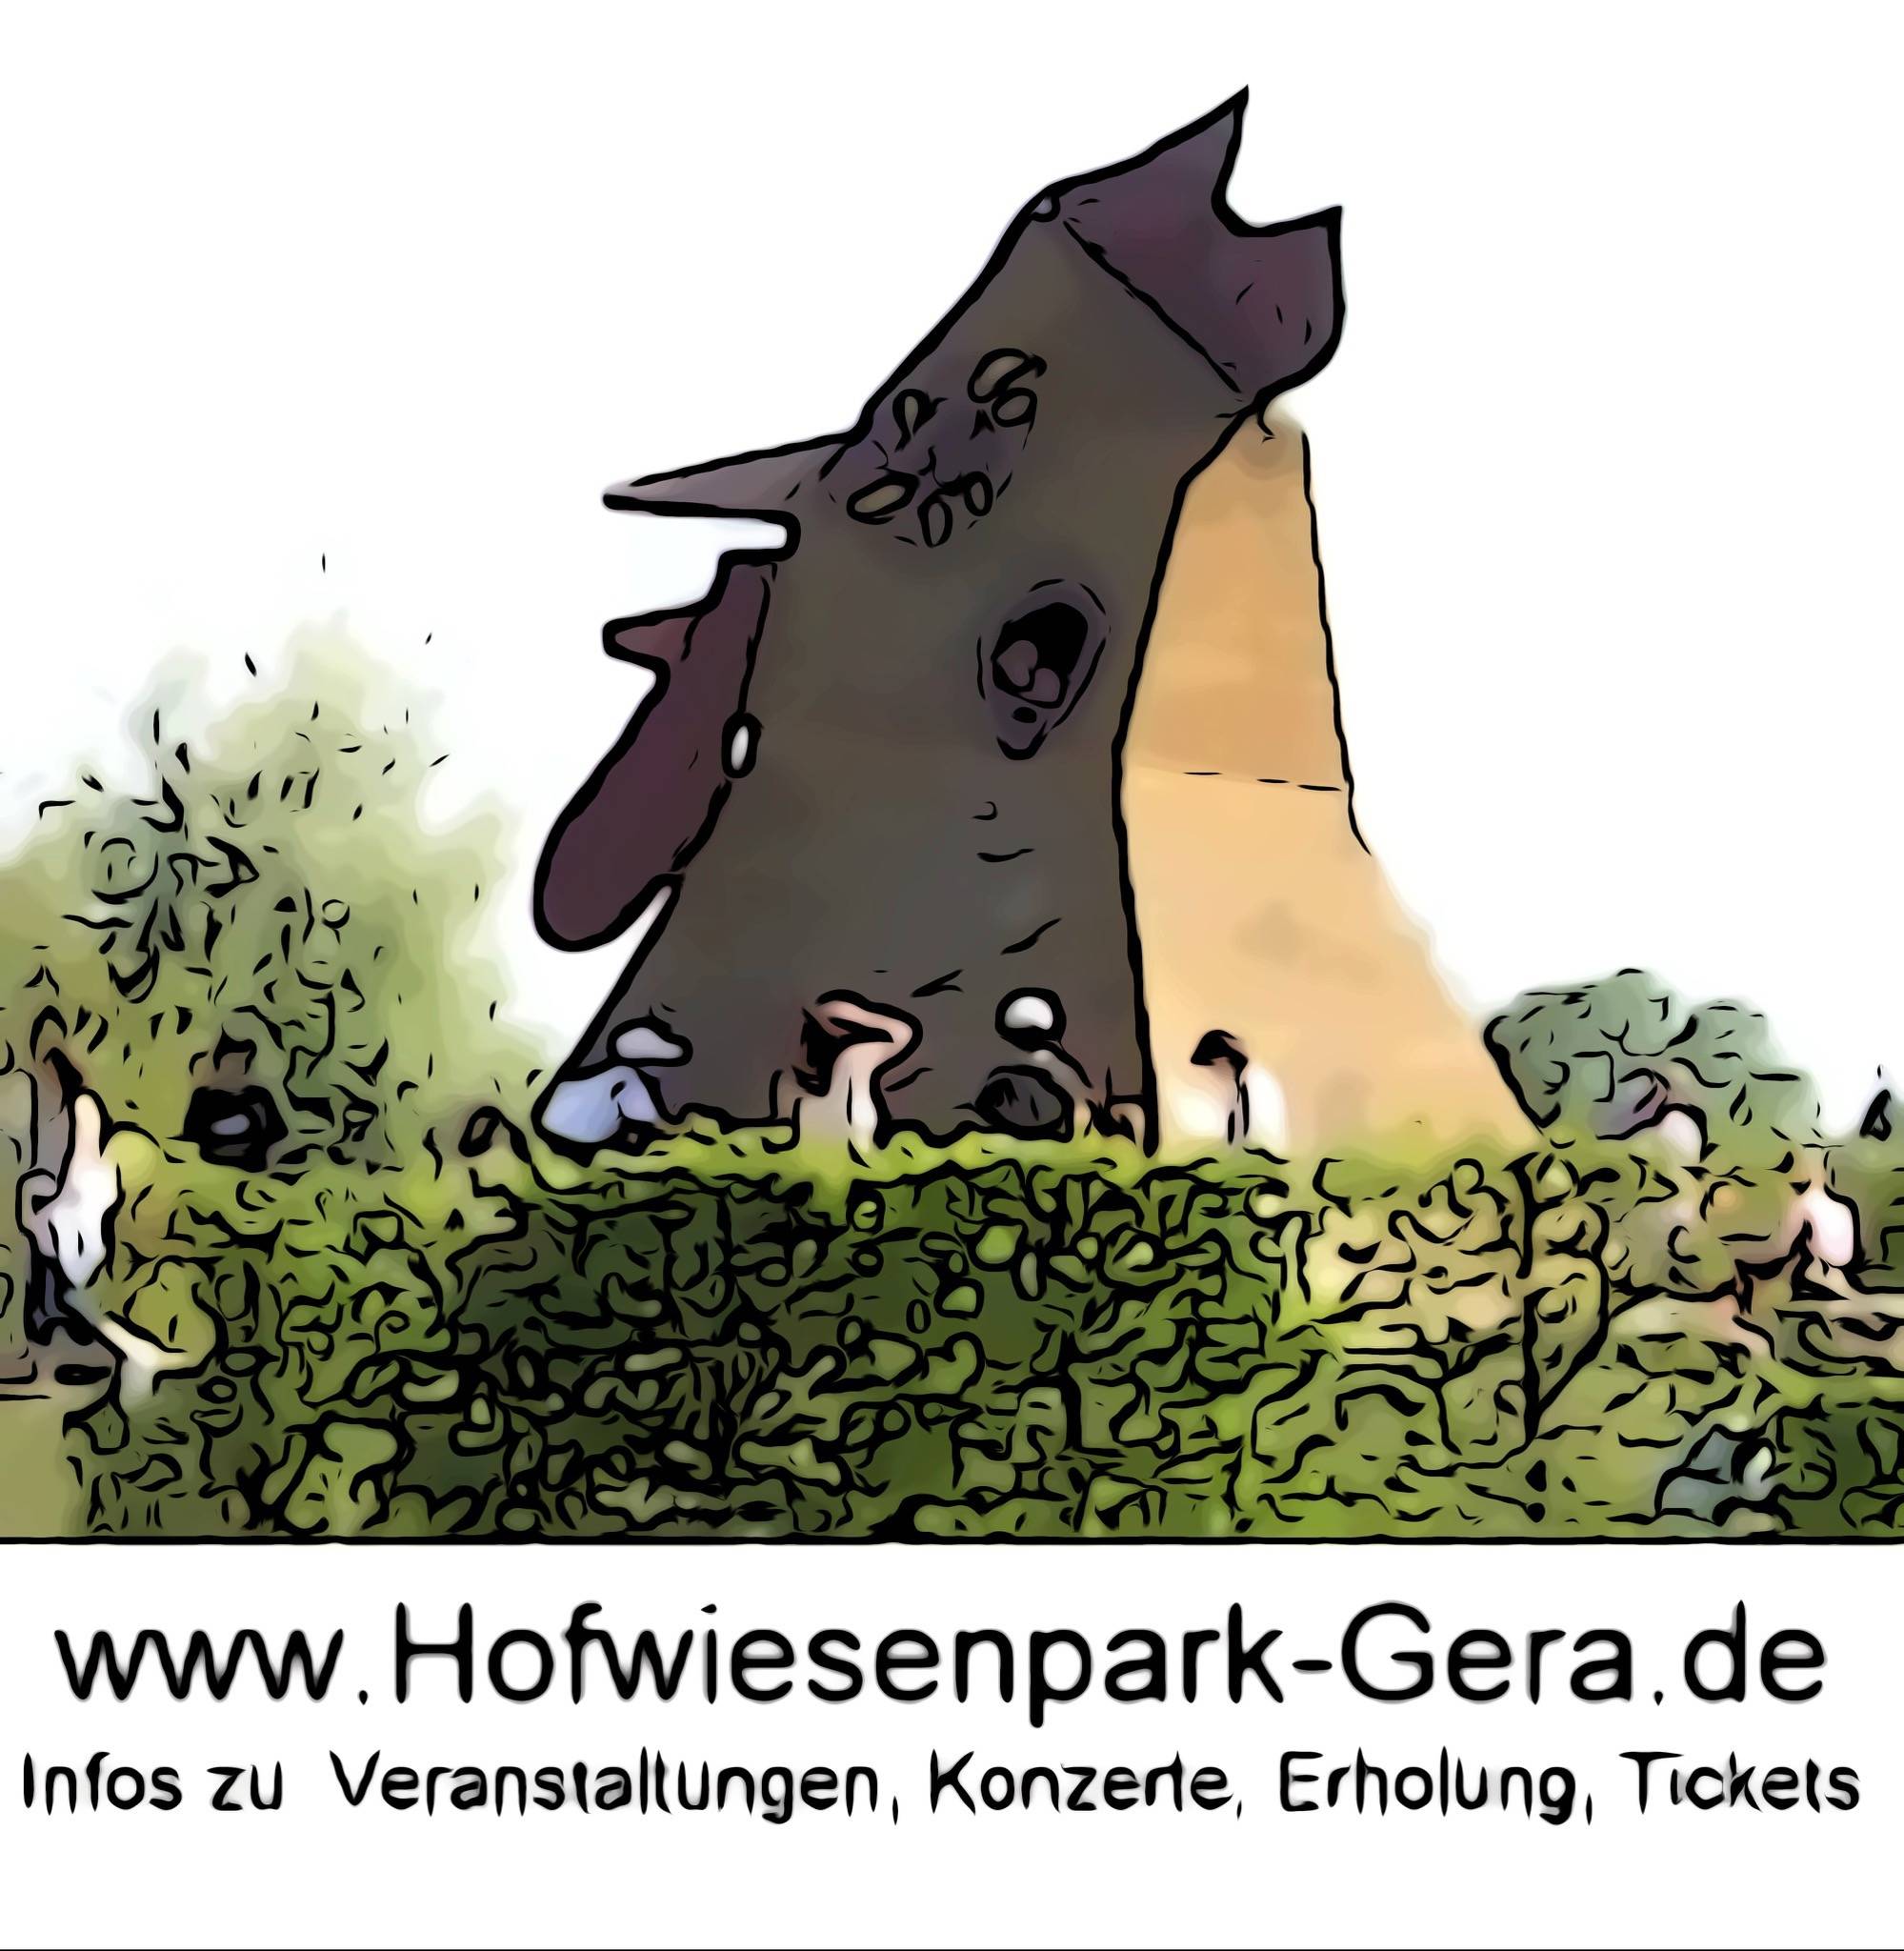 (c) Hofwiesenpark-gera.de